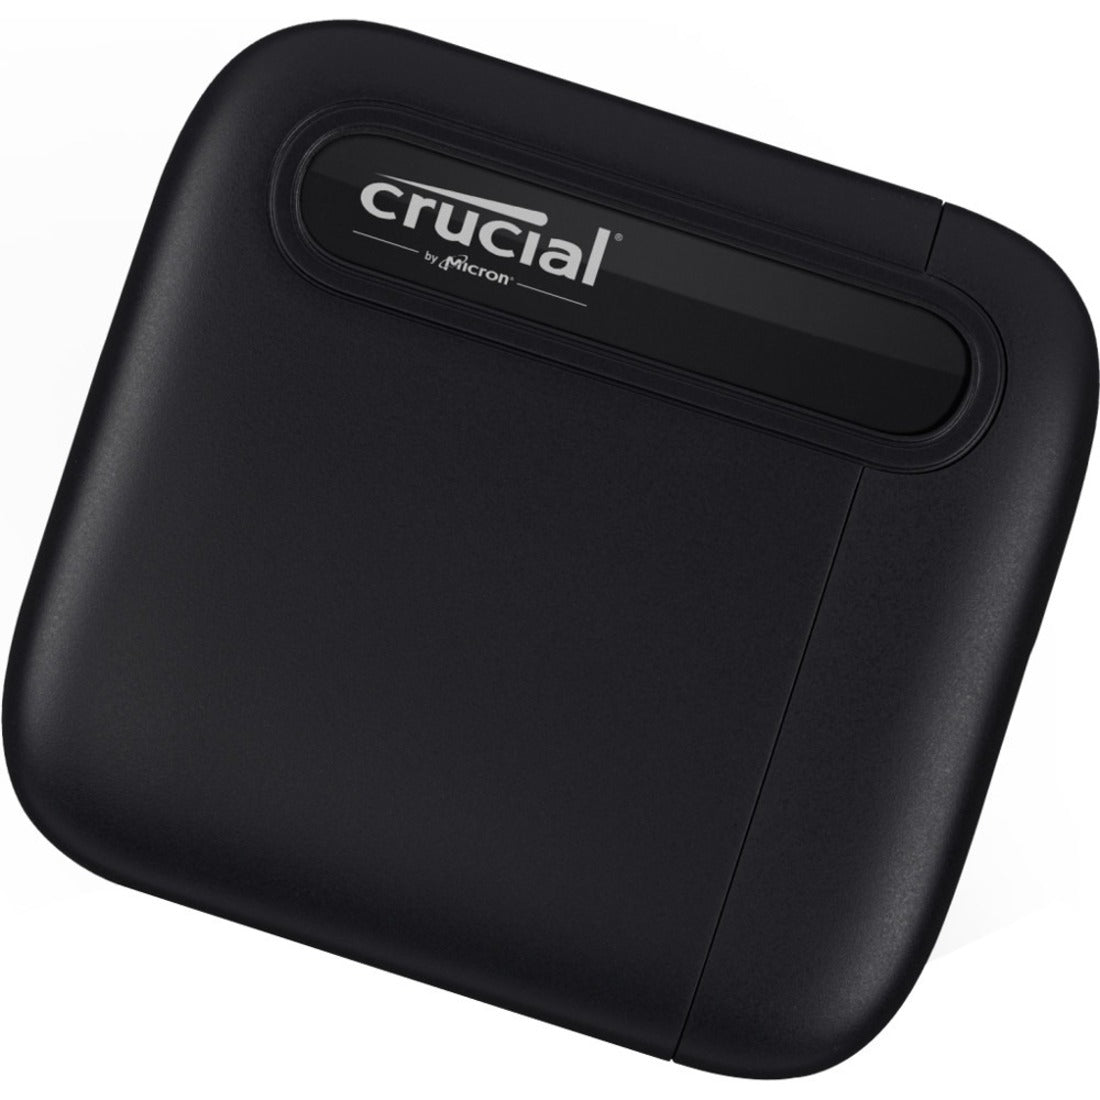 Crucial CT1000X6SSD9 X6 1TB Portable SSD, USB 3.2 Gen-2 Type-C, 540 MB/s Read Speed